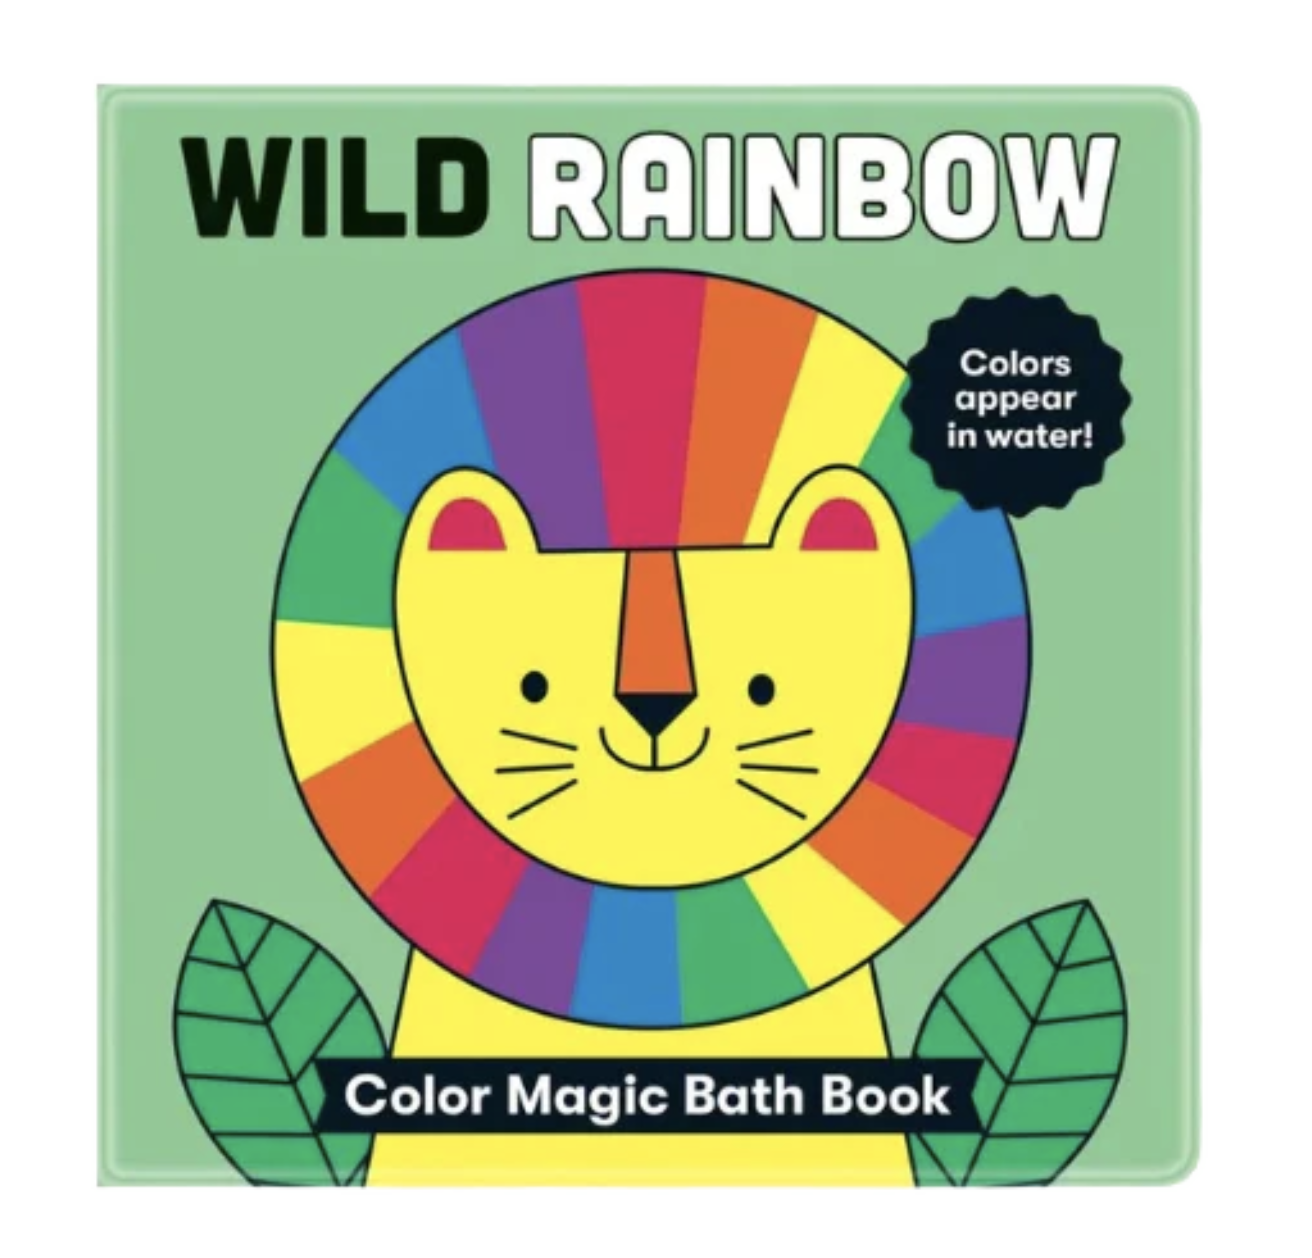 Color Magic Bath Book For Kids – Wild Rainbow